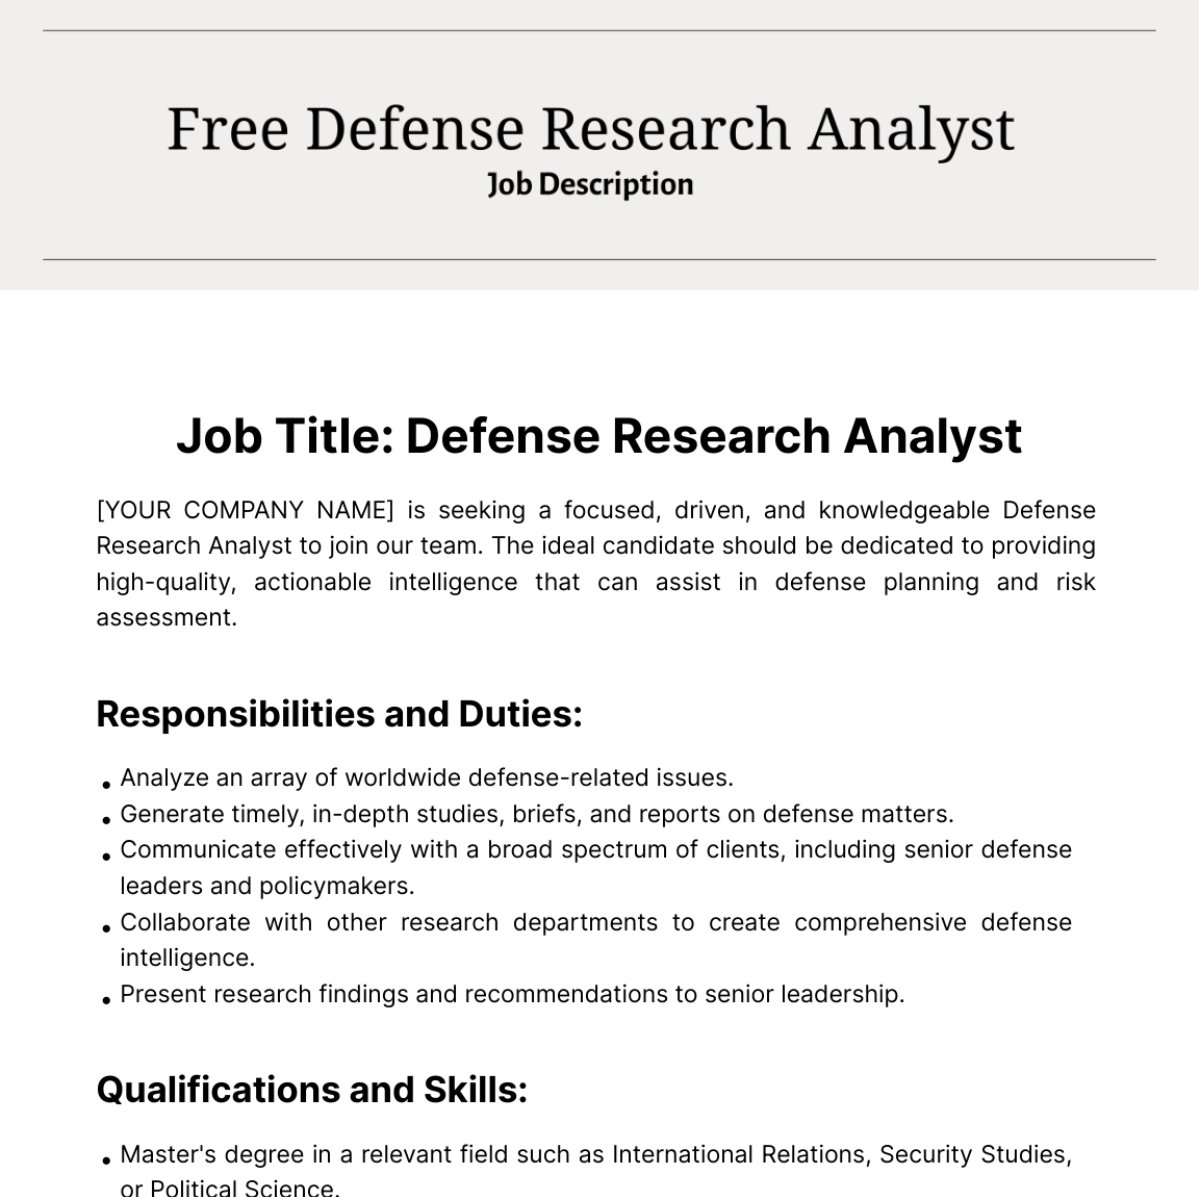 Defense Research Analyst Job Description Template